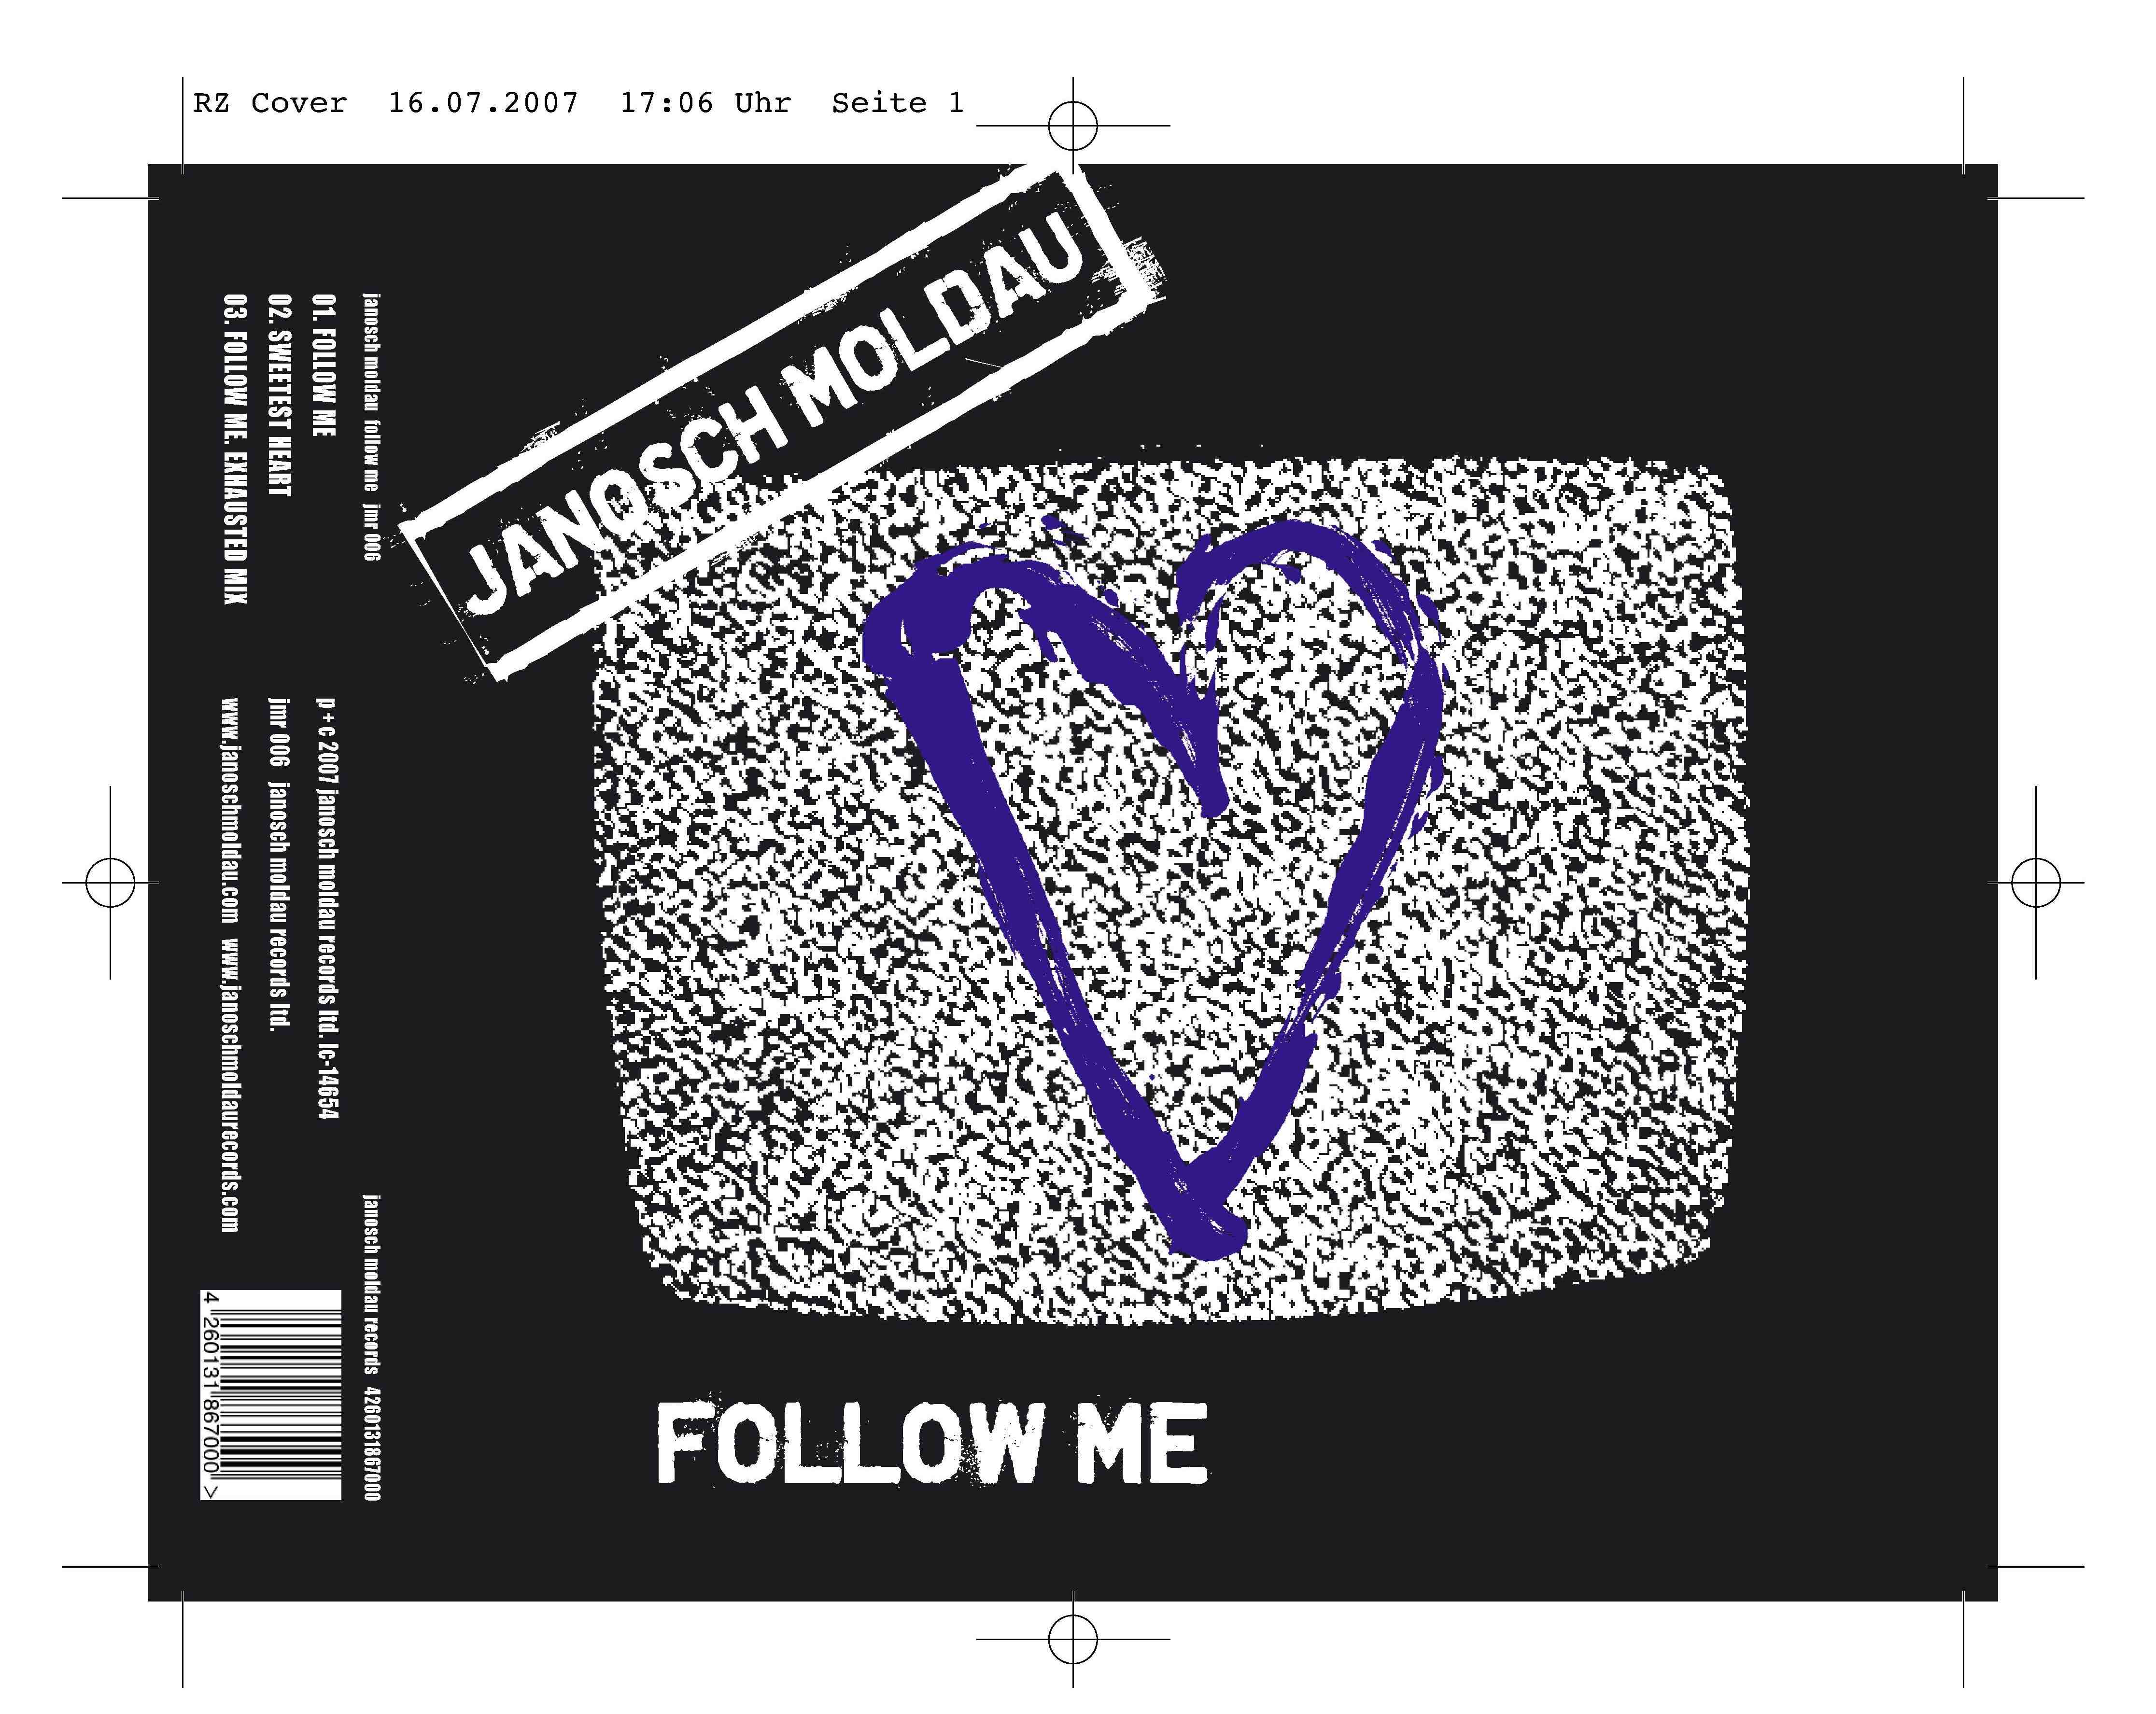 janosch moldau follow me (single)